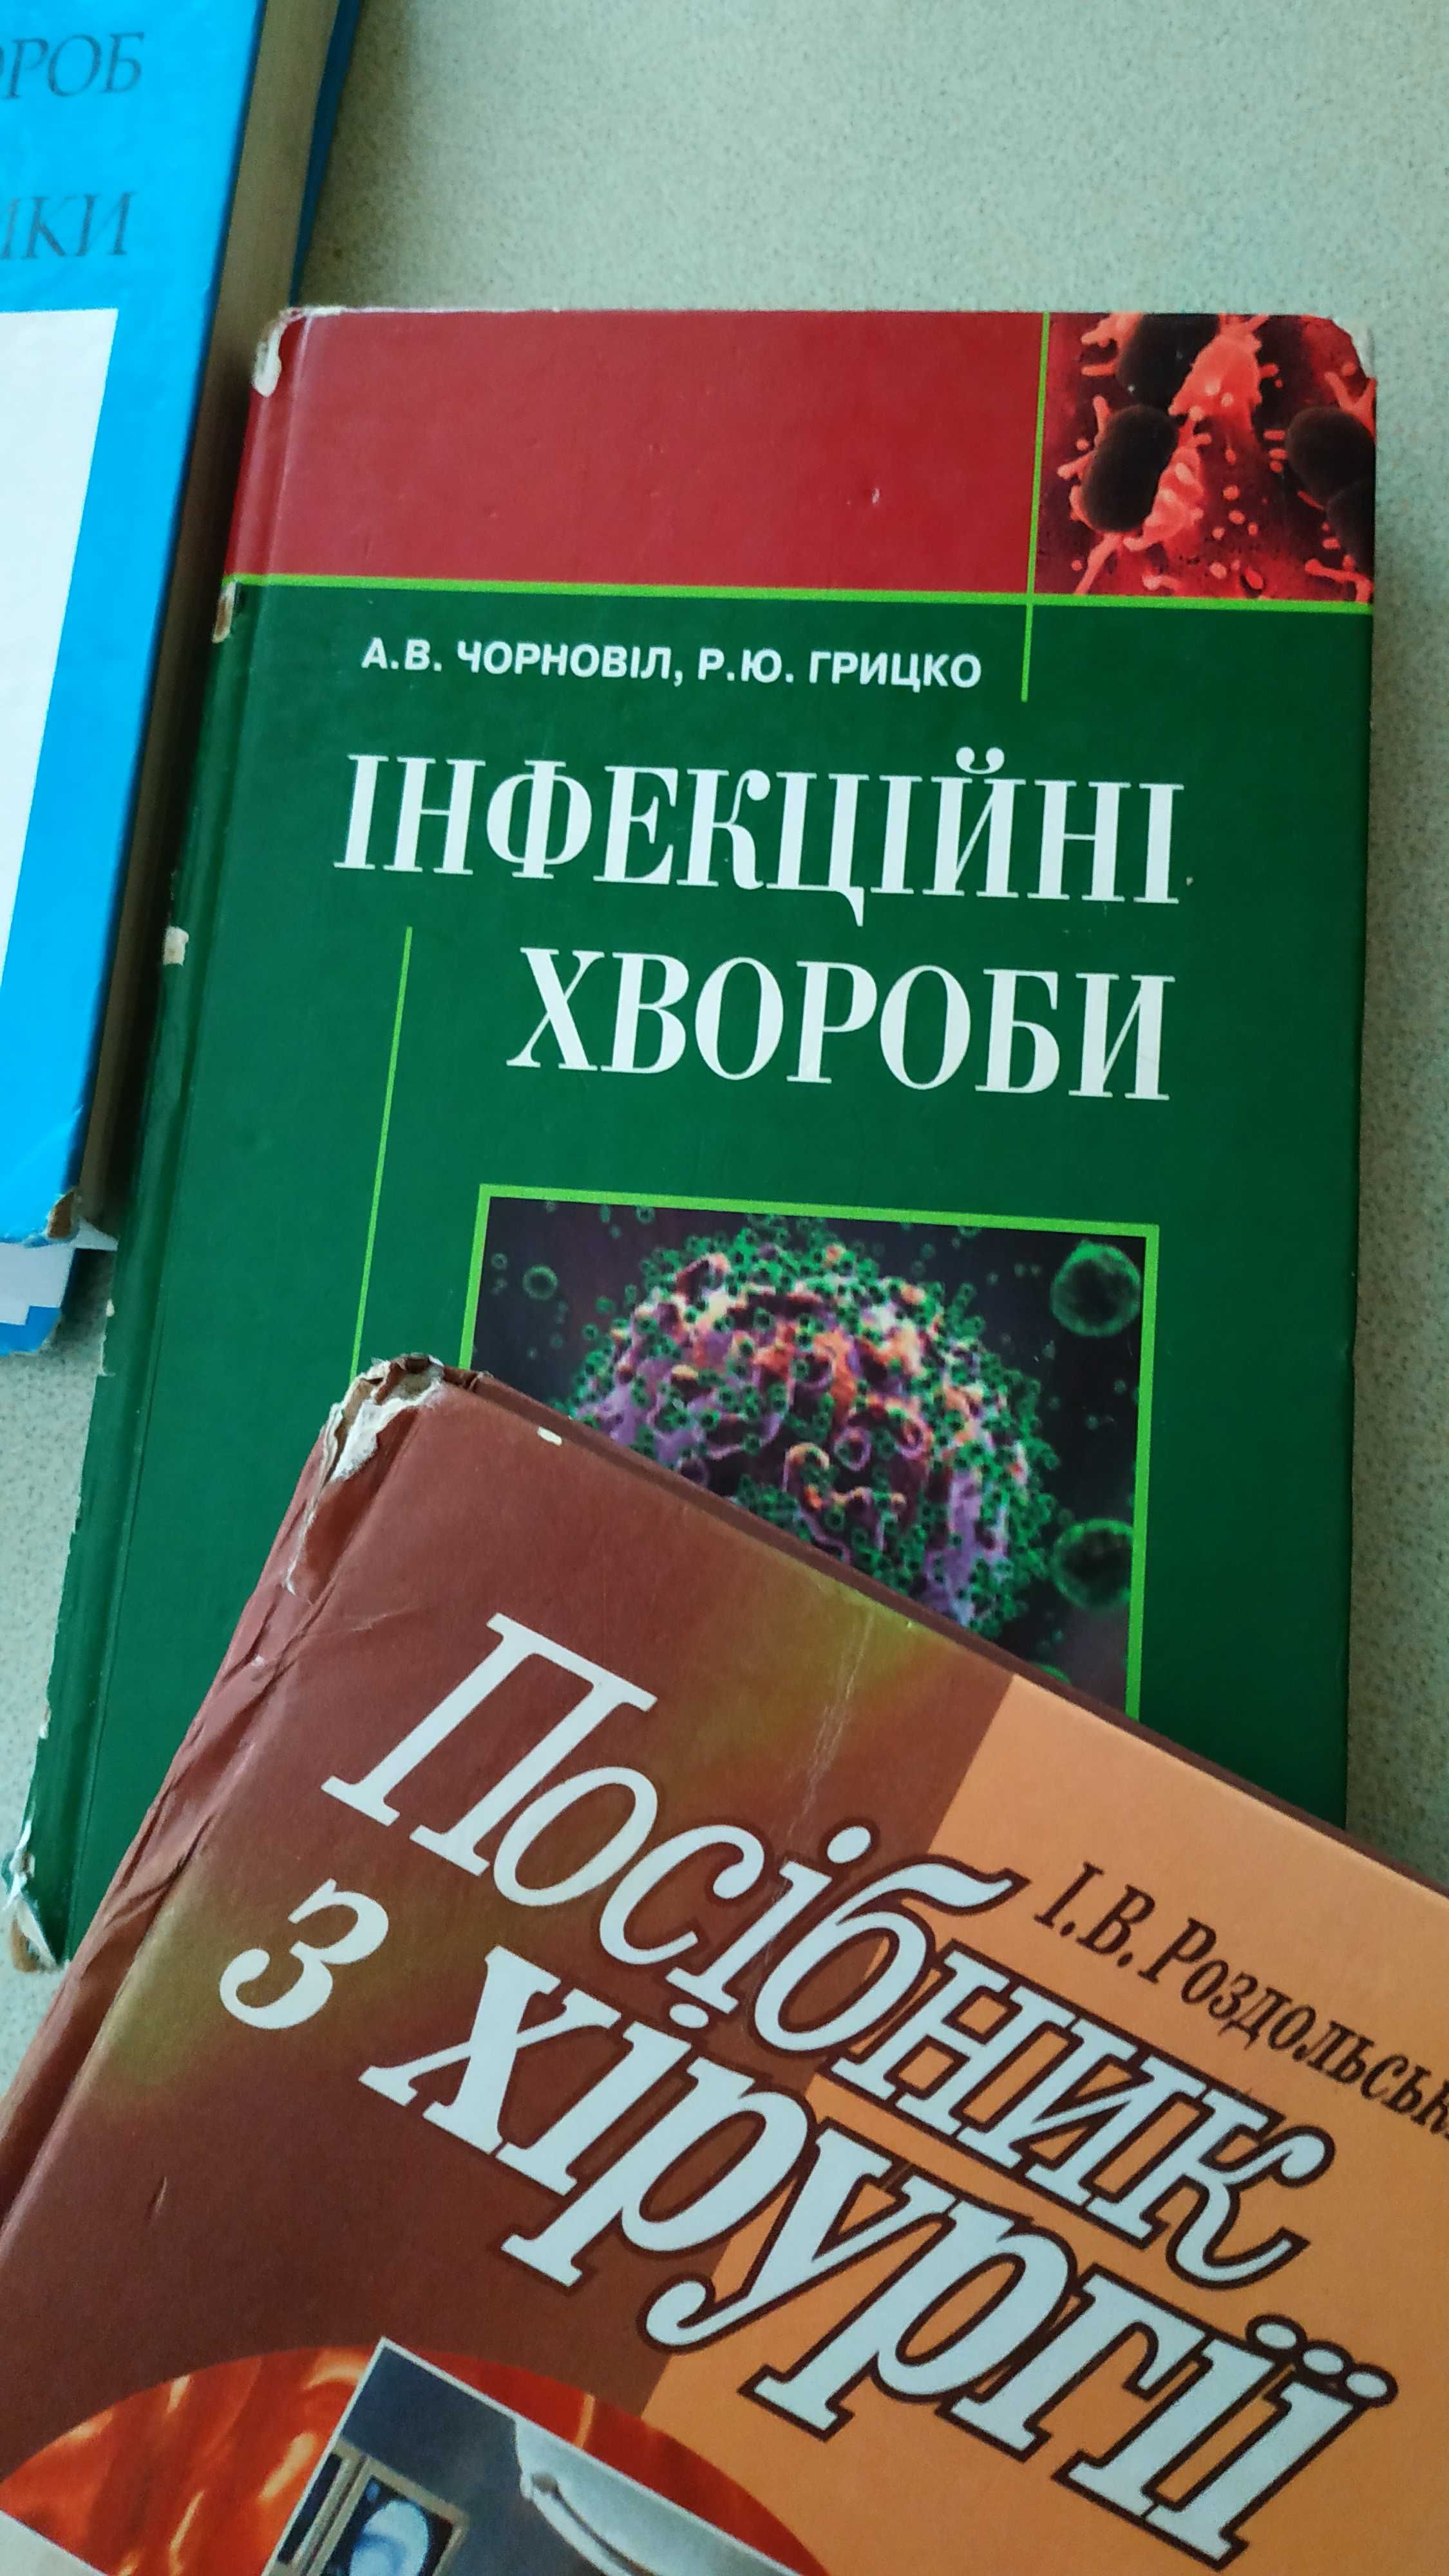 Книги, учебники по медицине.